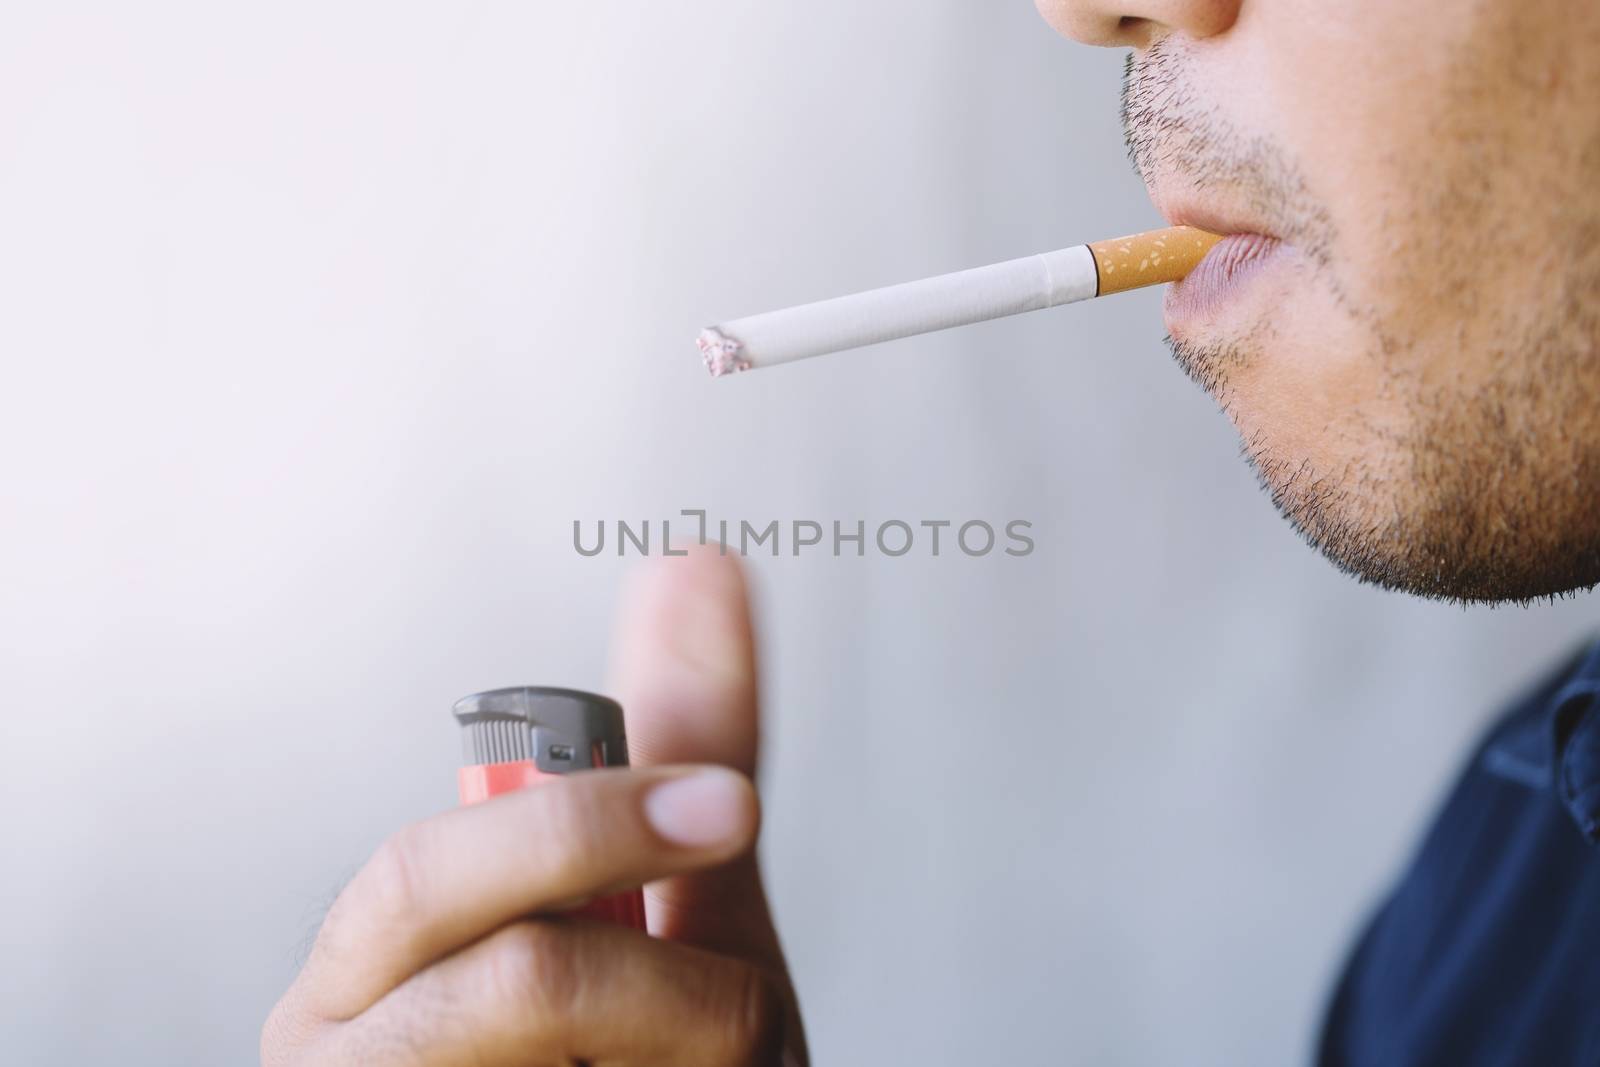 A man is smoking